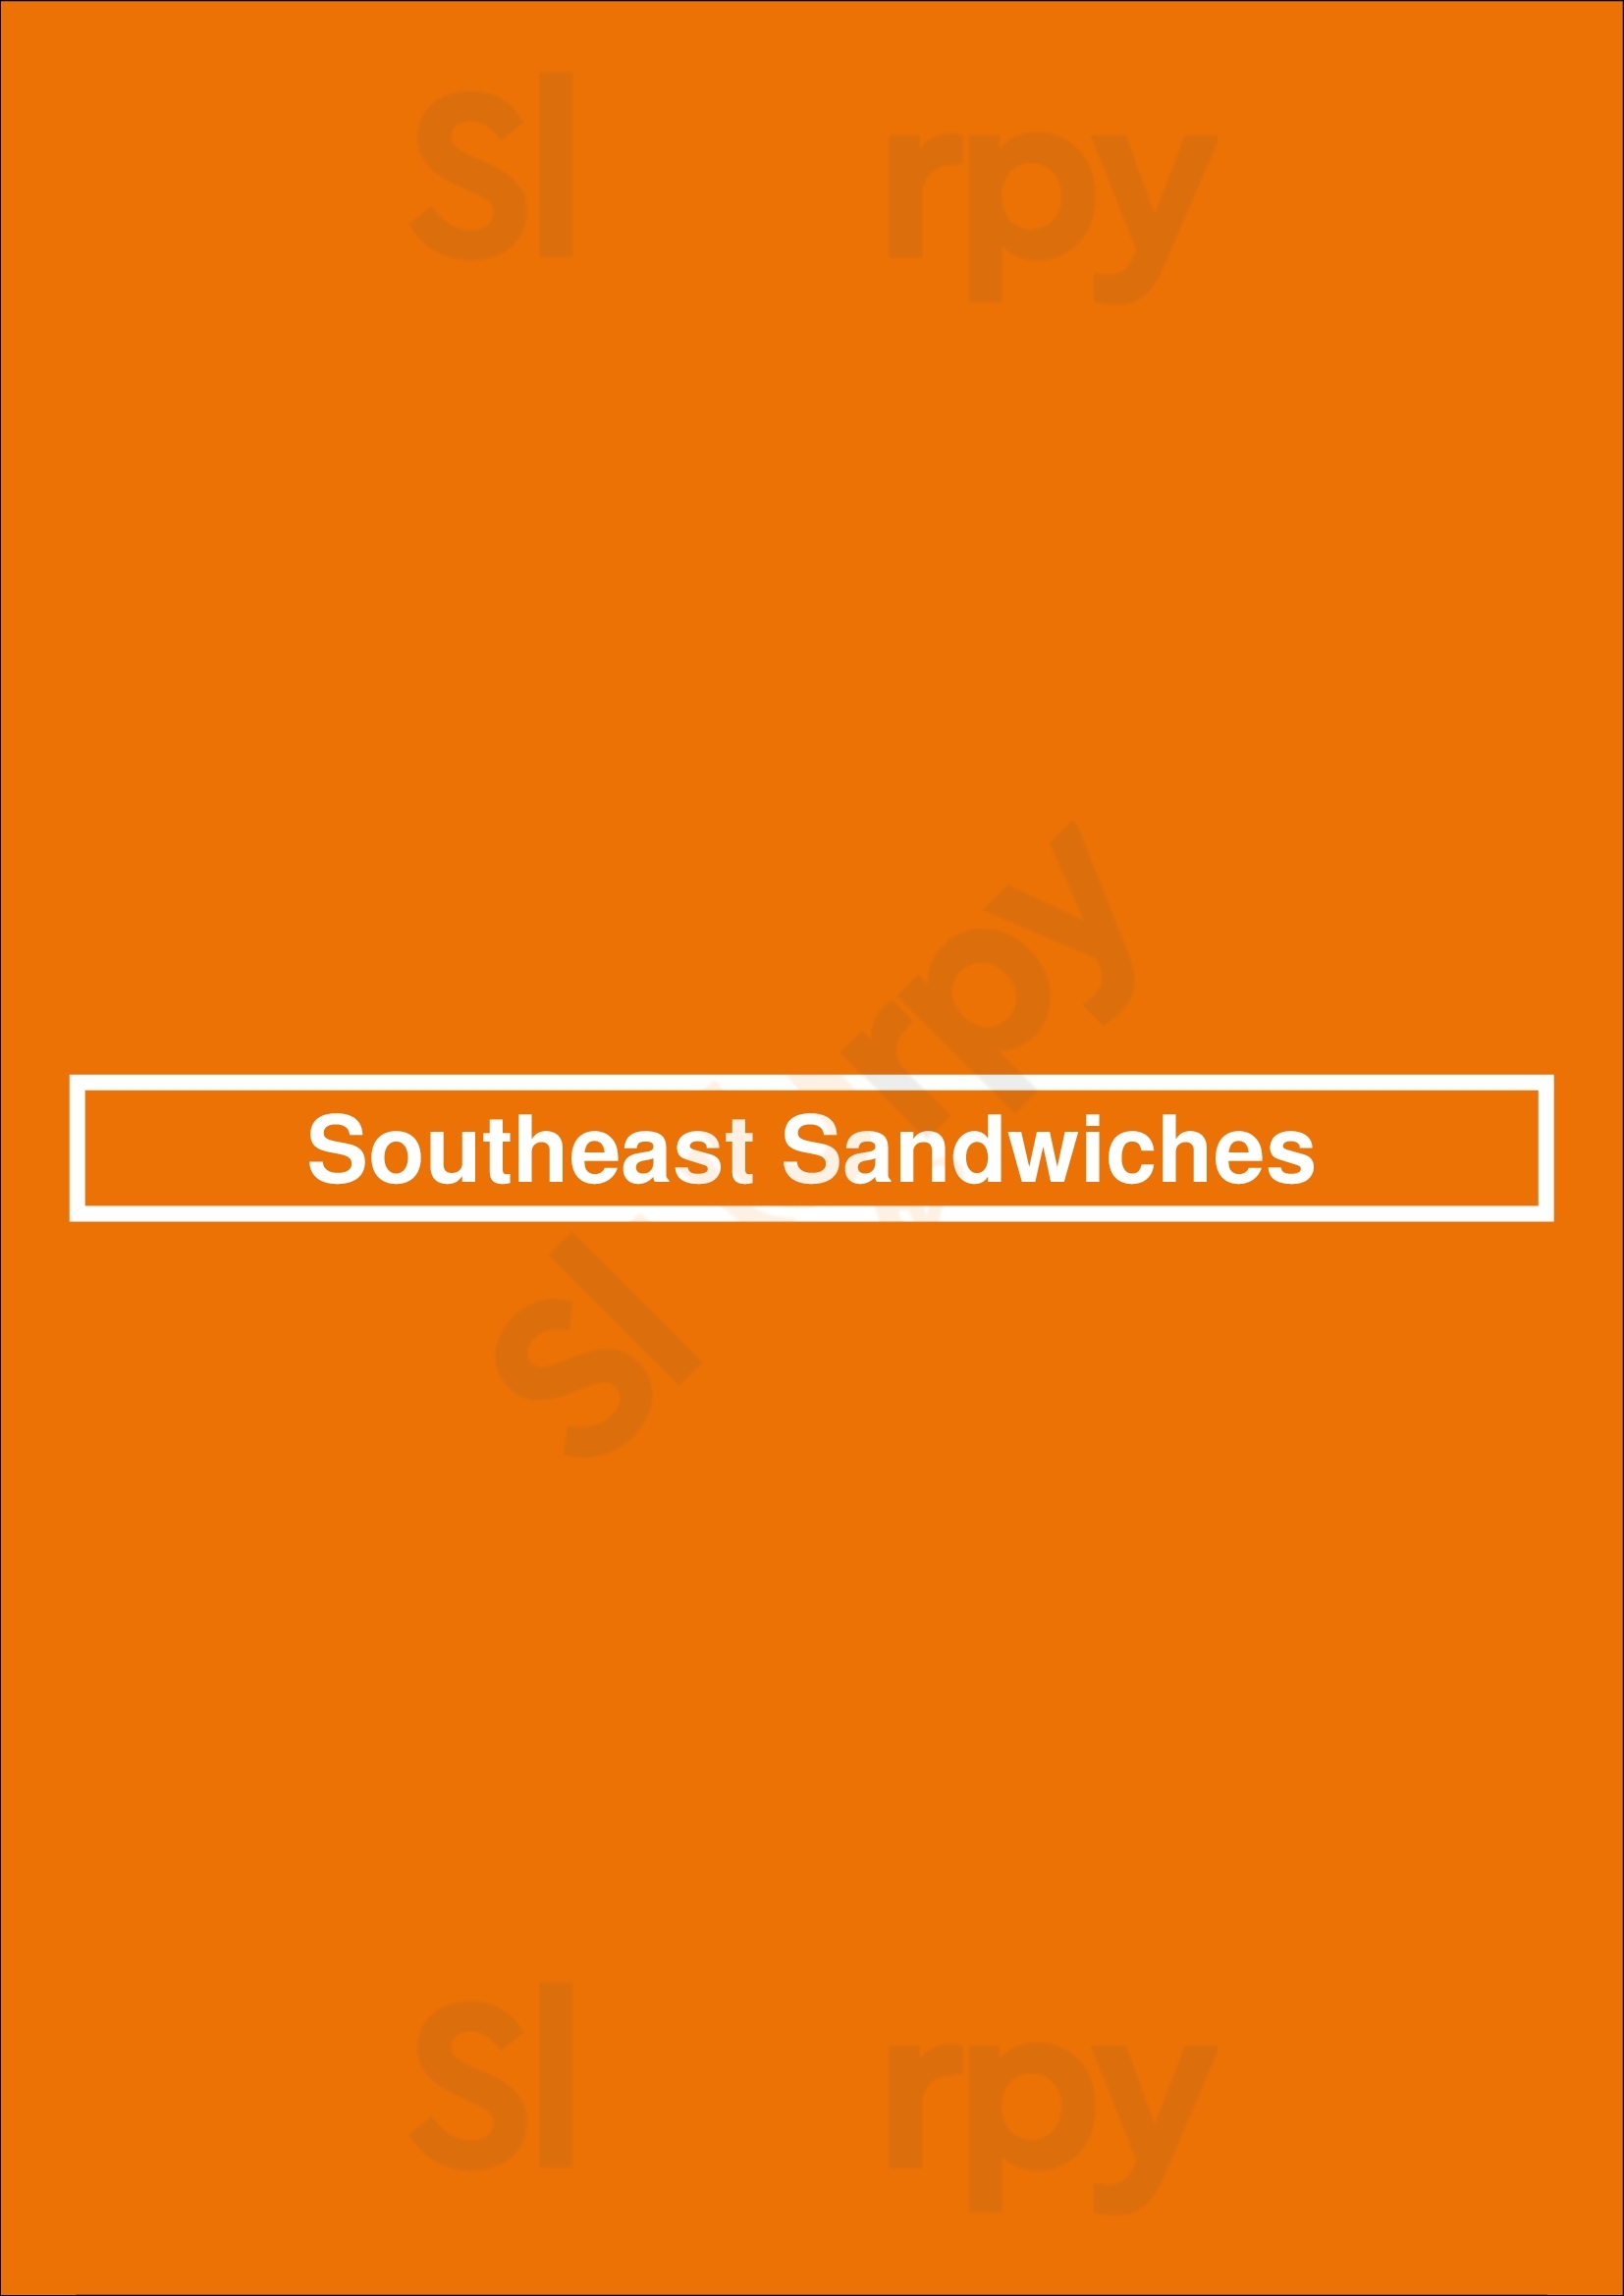 Southeast Sandwiches Woodbridge Menu - 1